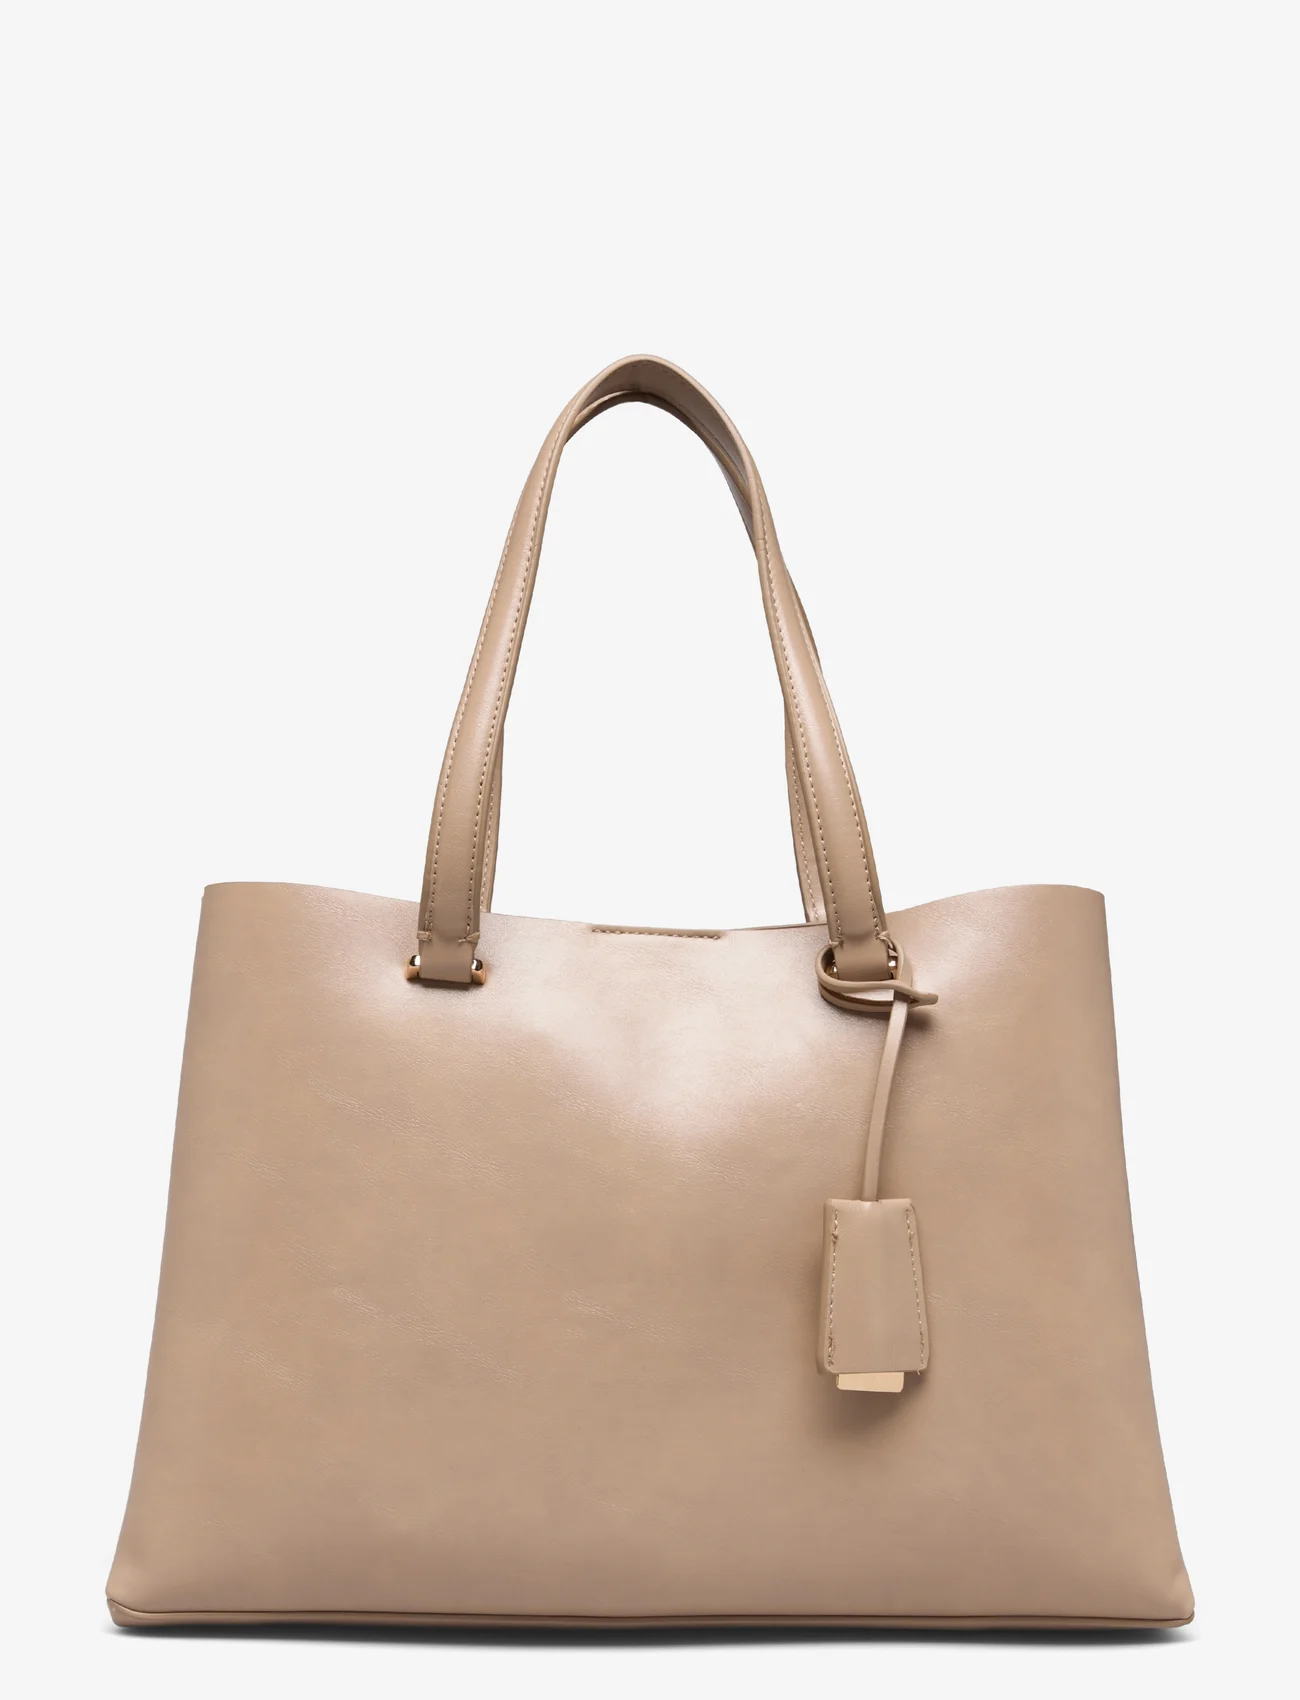 Mango - Shopper bag with dual compartment - shoppere - lt pastel brown - 0